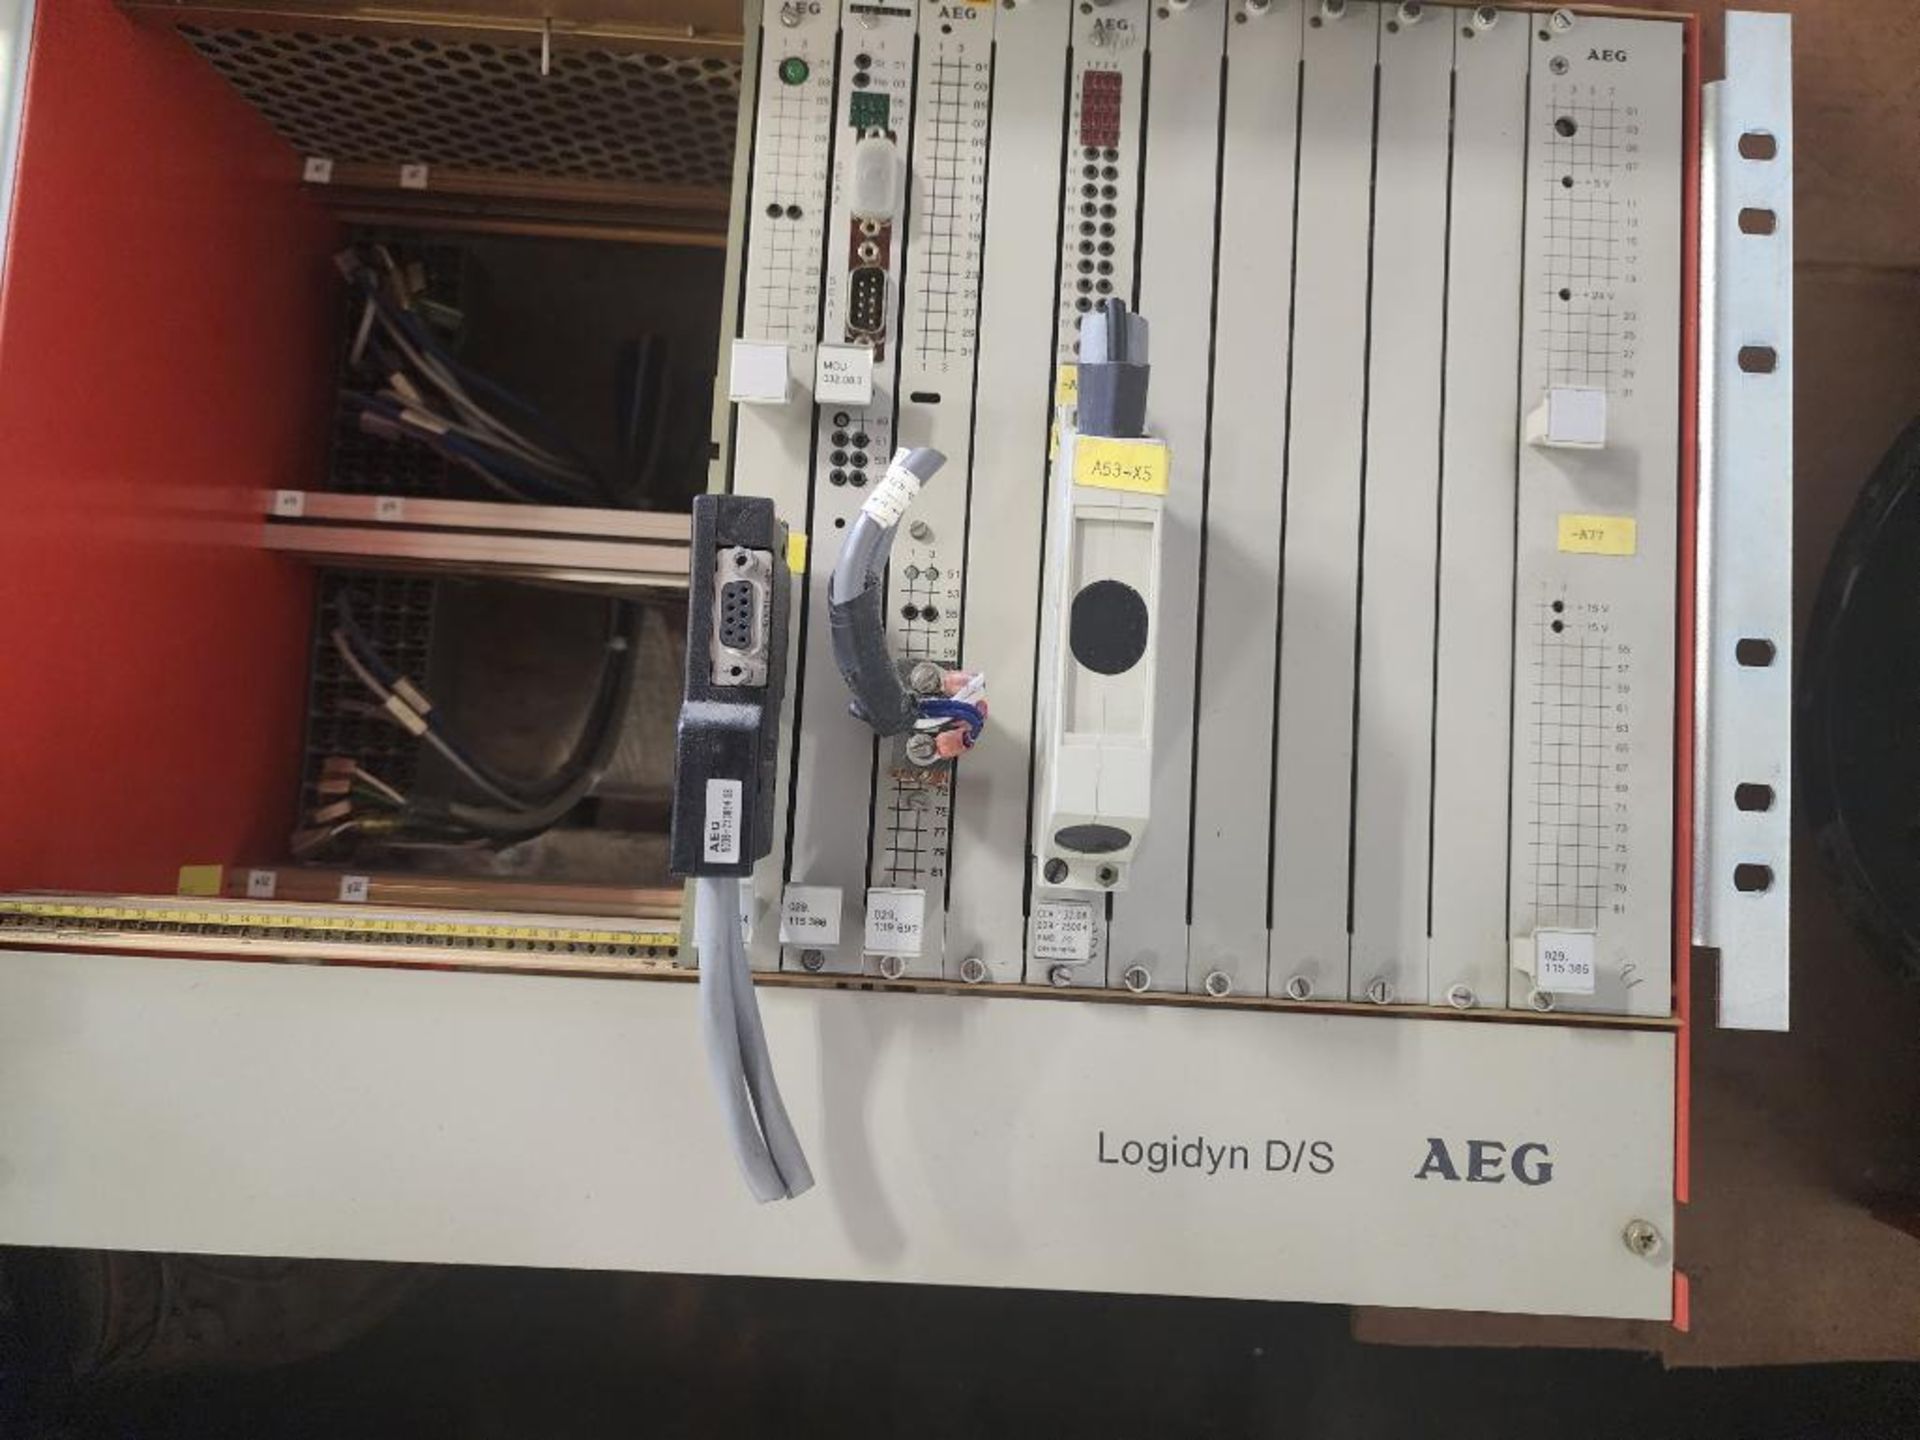 AEG Logidyn D/S Card Module Rack & AEG MINISEMI D500/40+G0 Drive - Image 2 of 4